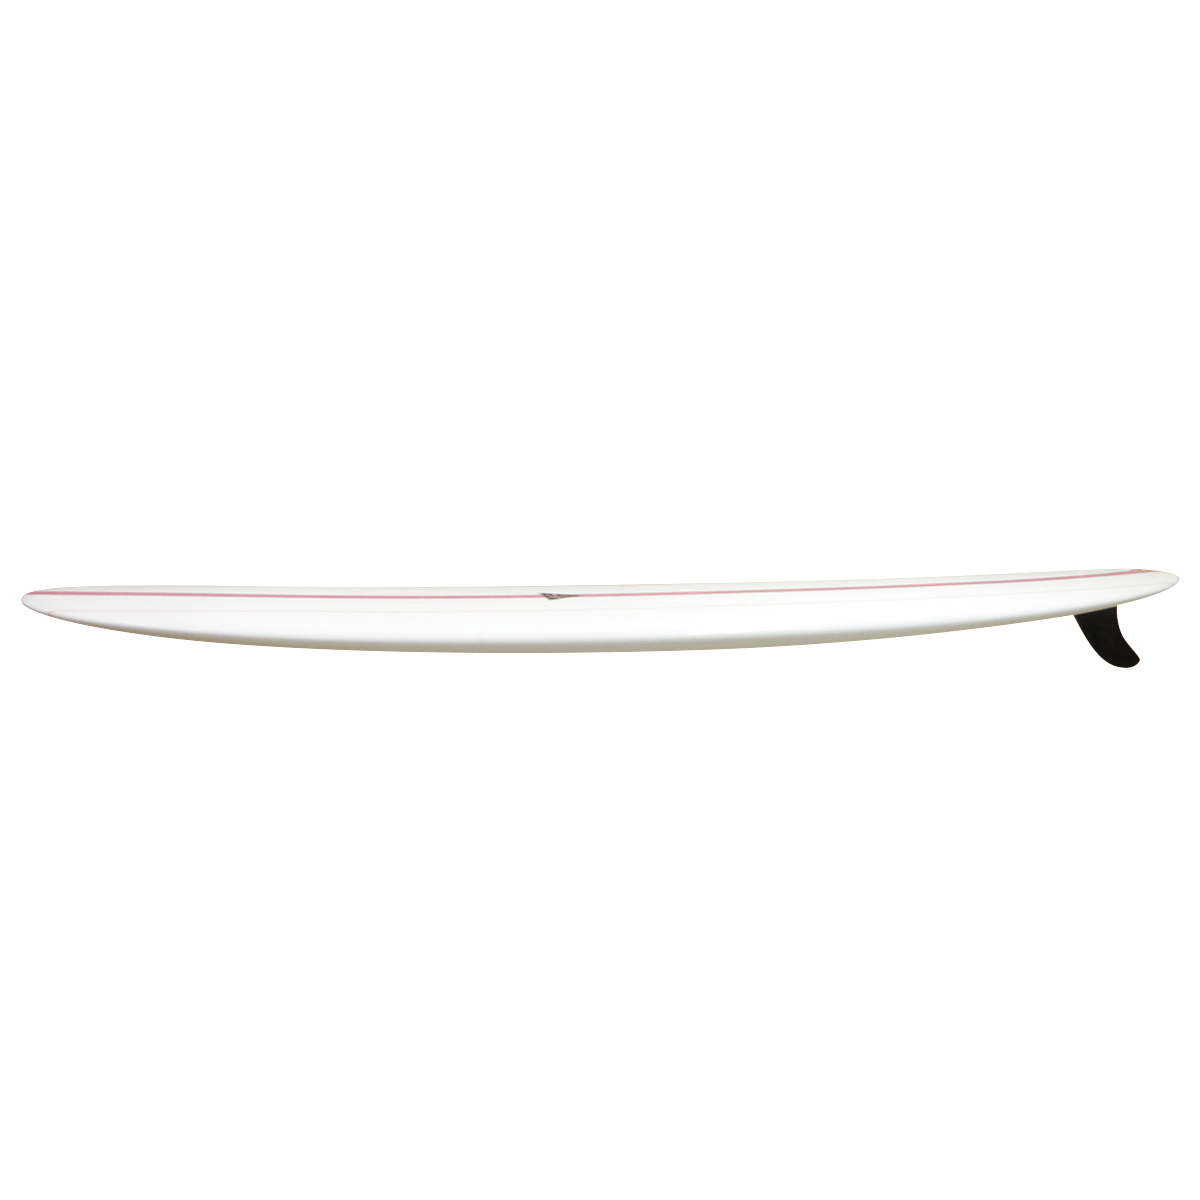 MONSTAH! SURFBOARDS / 76 Model 6`1